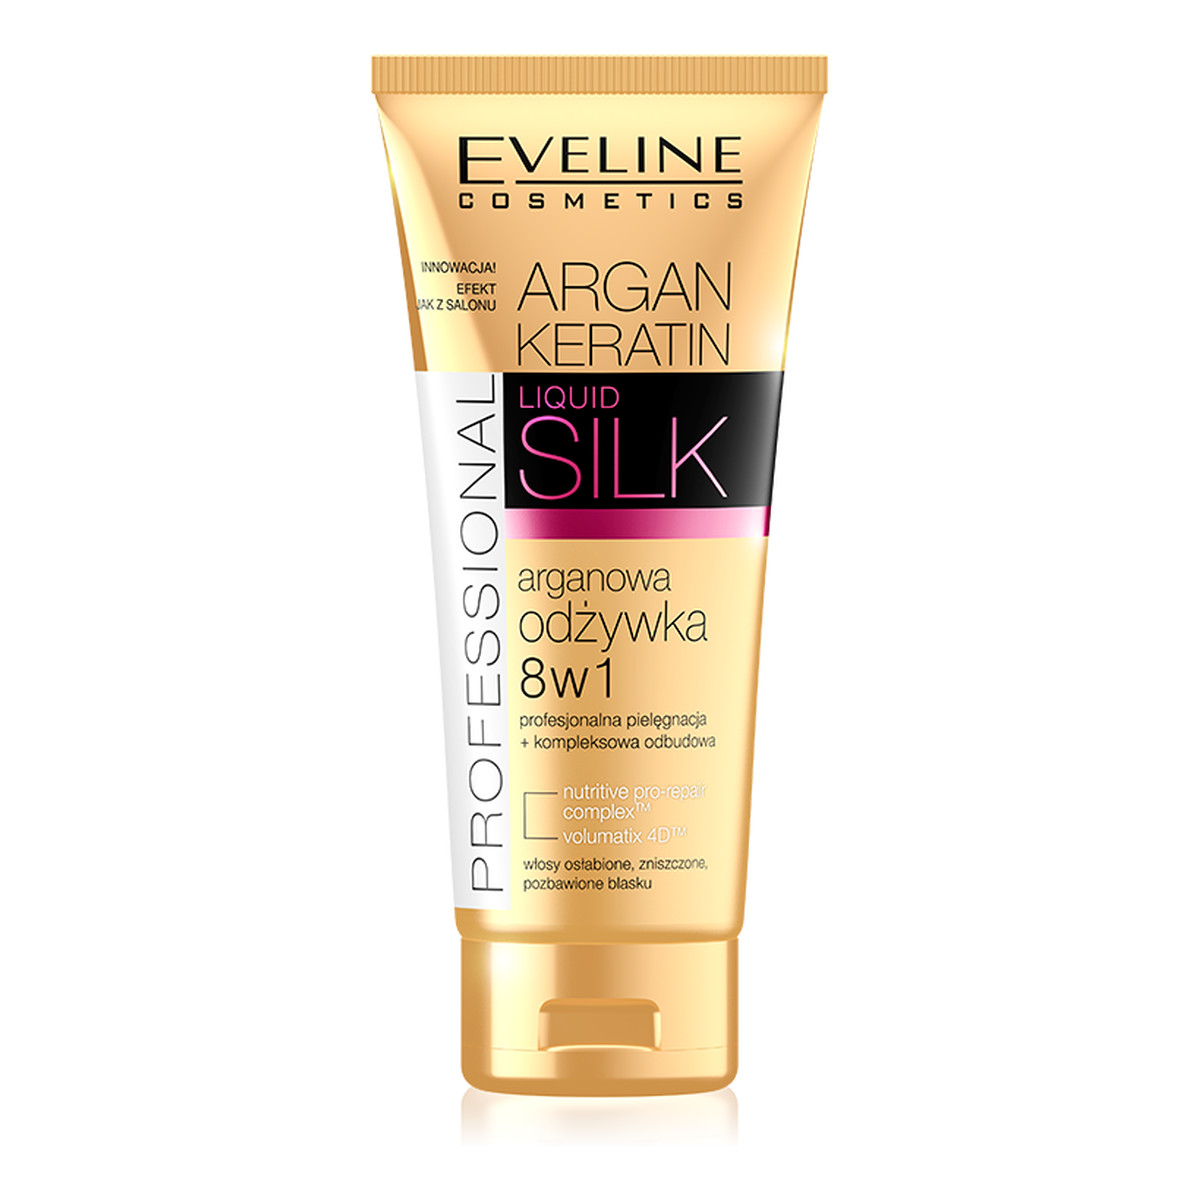 Eveline Argan Liquid Silk Arganowa Odżywka 8w1 200ml